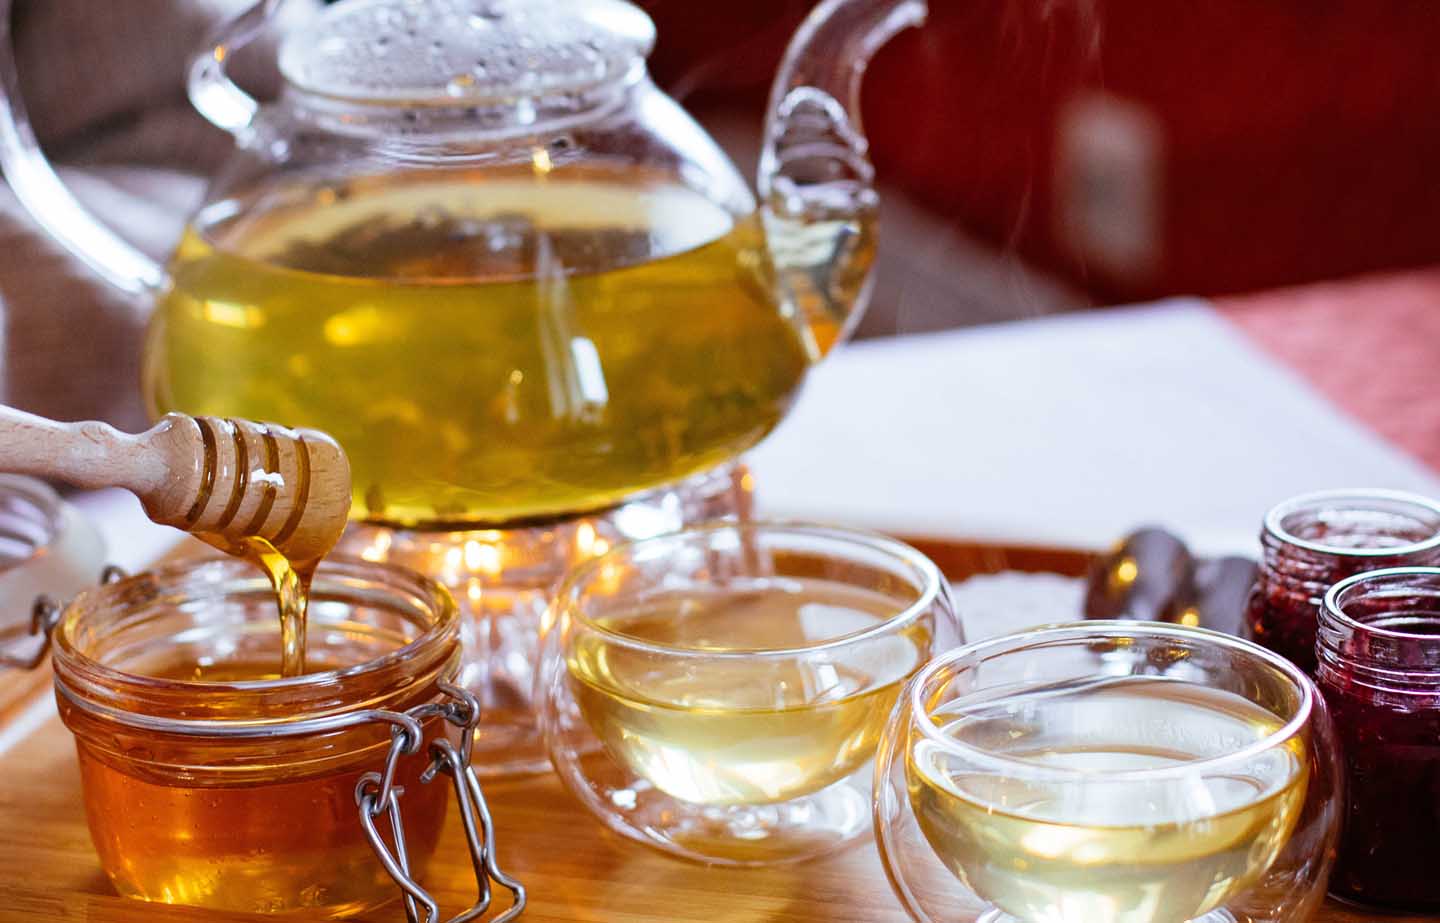 Tea sweetened with honey - Photo by Valeria Boltneva from Pexels